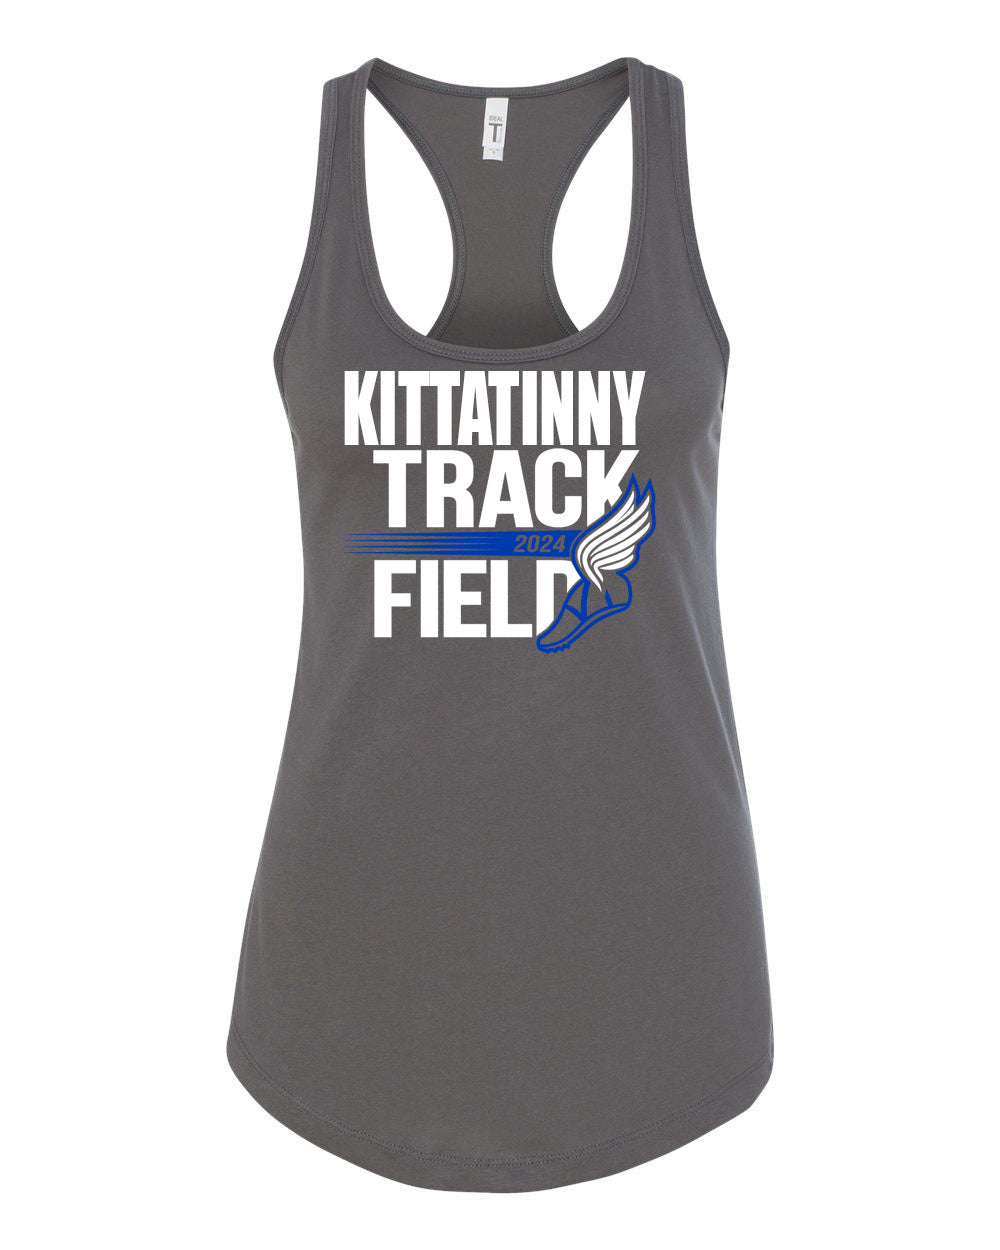 Kittatinny Track Design 6 Tank Top